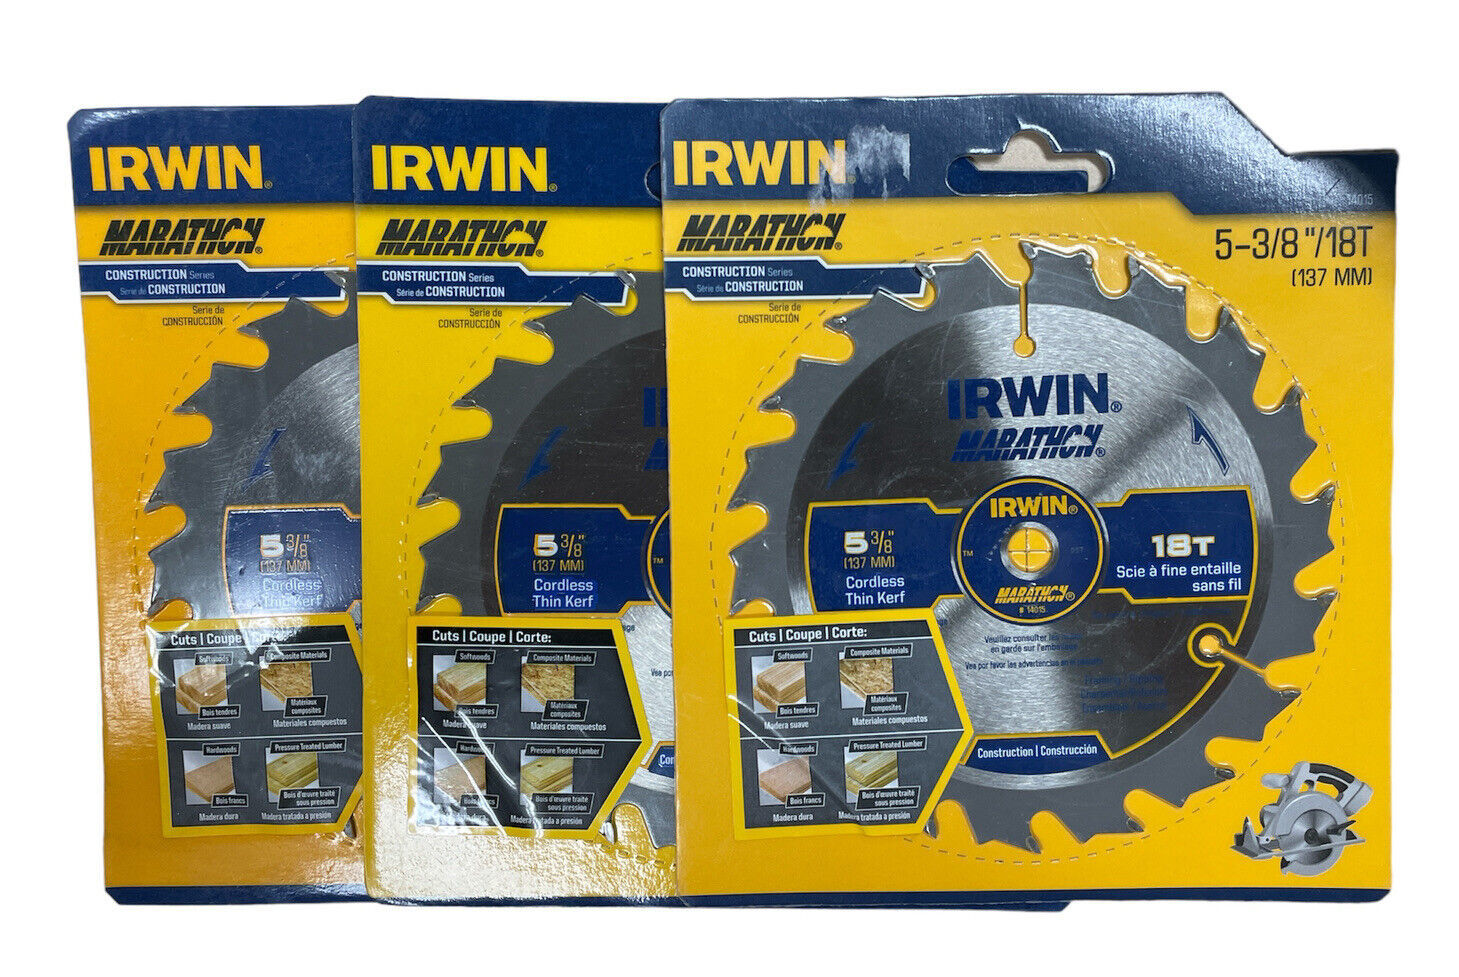 Irwin Marathon 5-3/8" 18 T Circular Blade 14015 Pack of 3 - $31.67